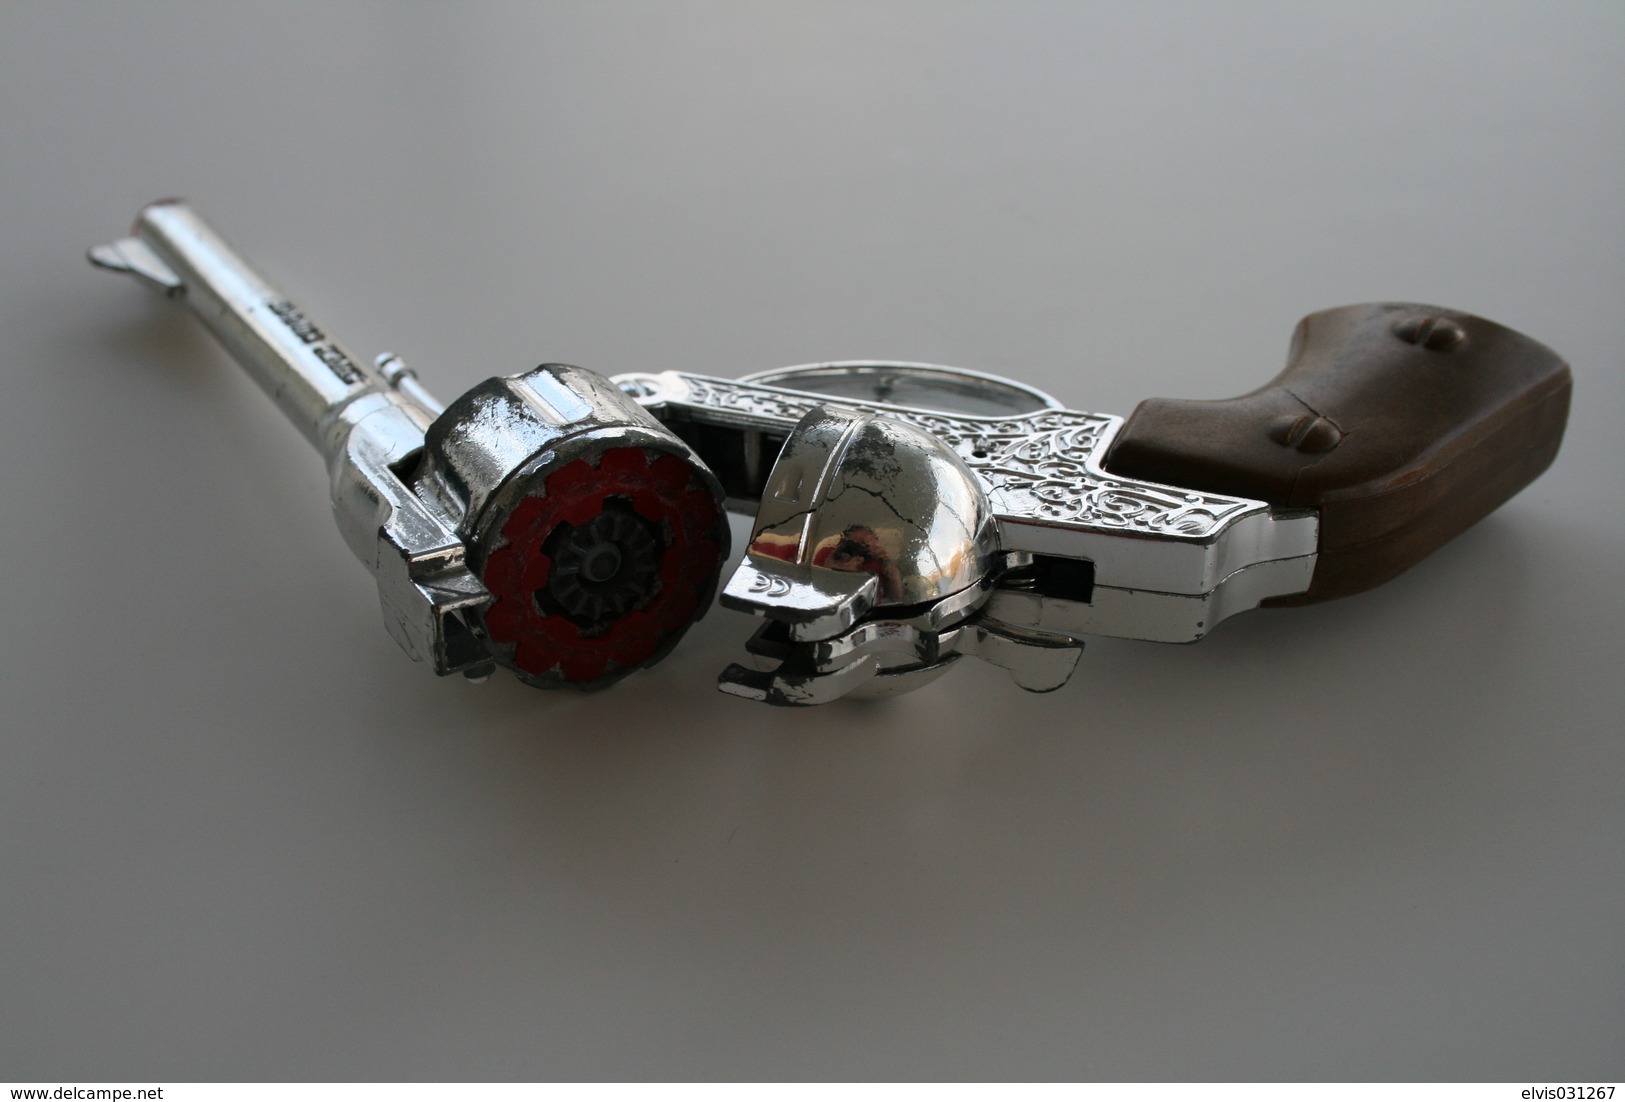 Vintage TOY GUN : LONE STAR SUPER COWBOY - L=16cm - 19??s - keywords : Cap Gun - Cork gun - Rifle - Revolver - Pistol